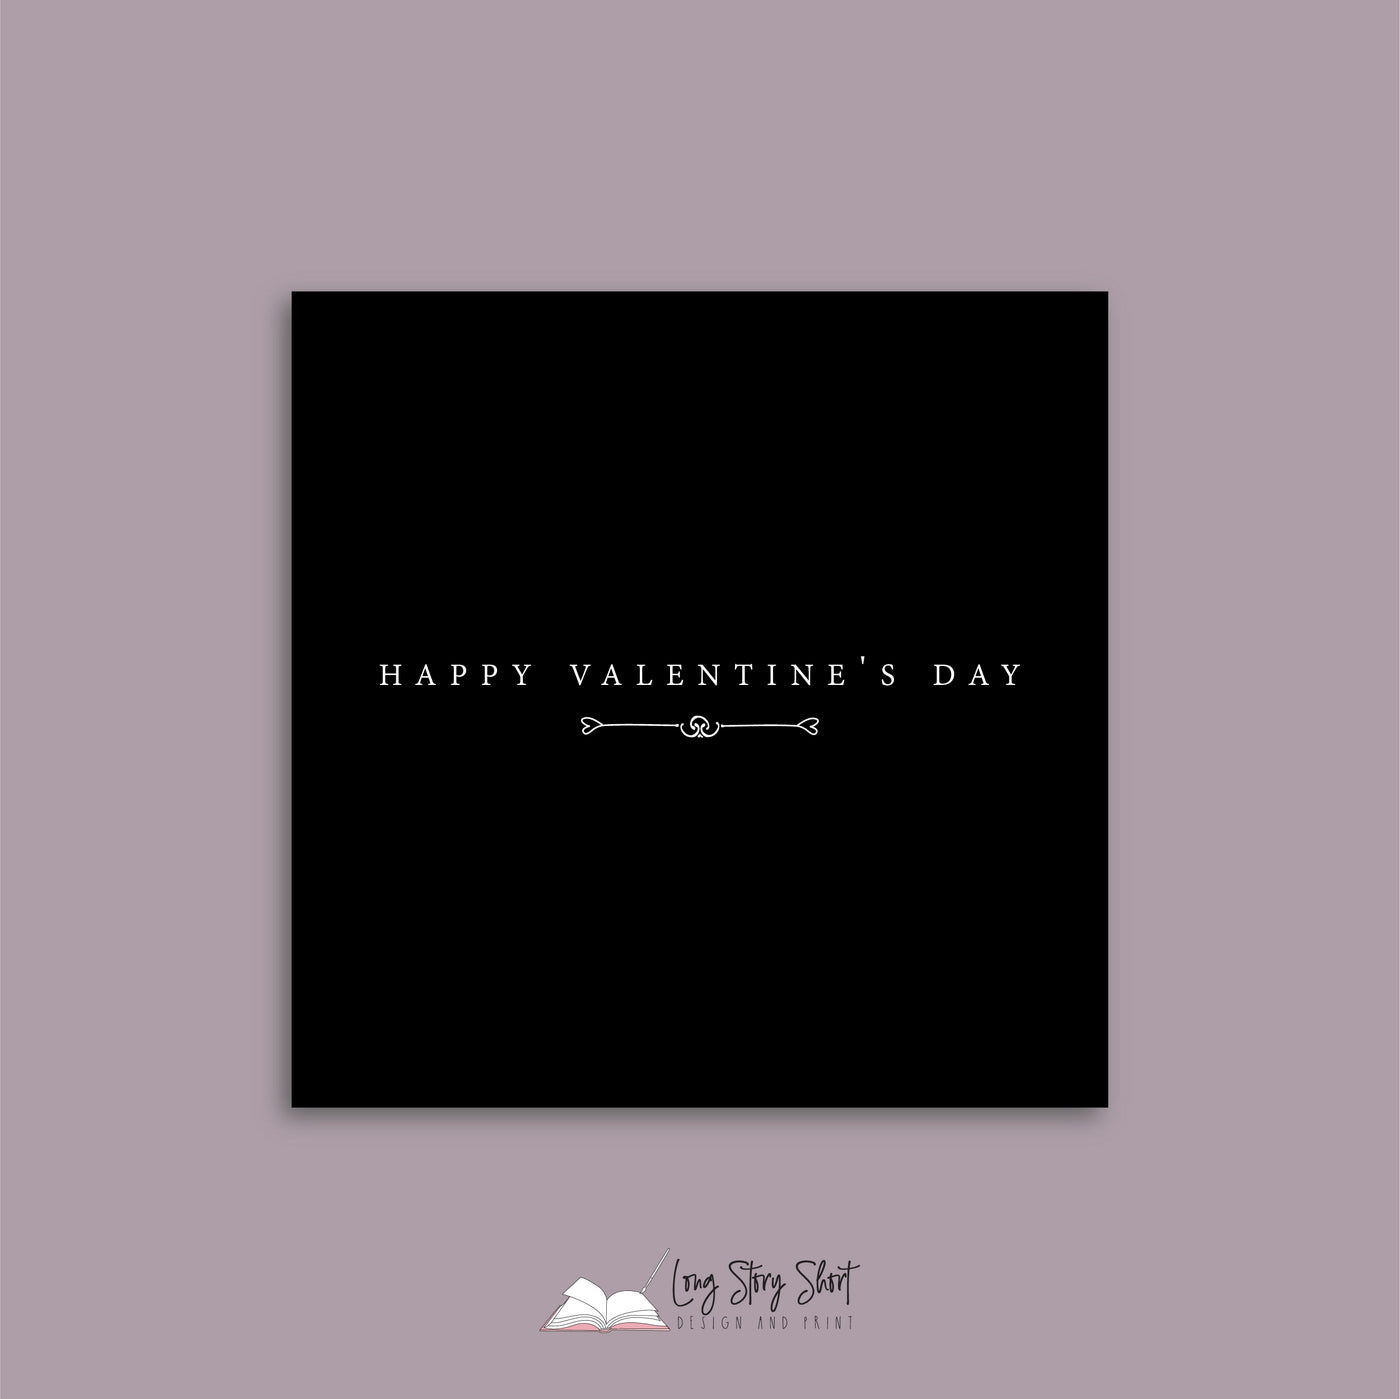 The Simplicity Valentines Black Square Range Vinyl Label Pack